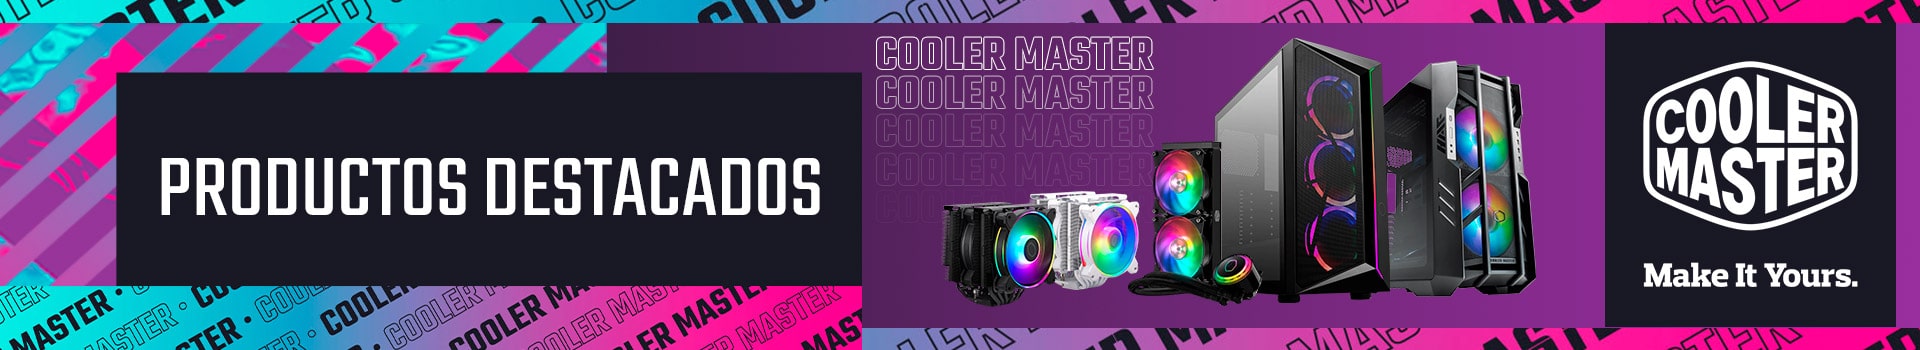 Productos destacados Cooler Master